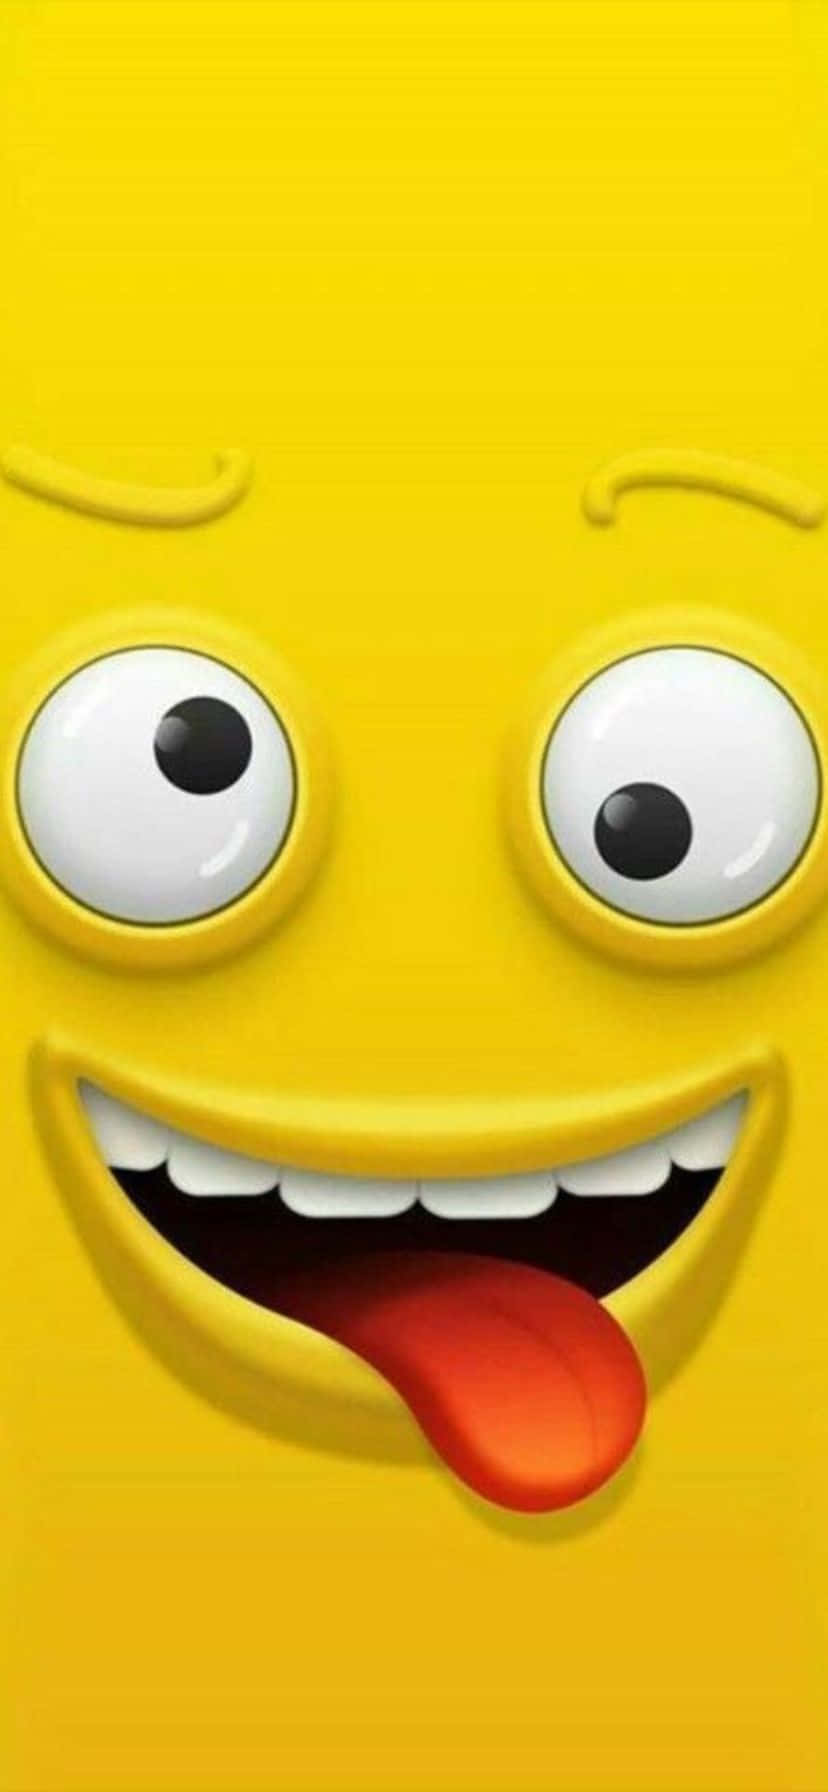 Goofy Yellow Face Emoji.jpg Wallpaper